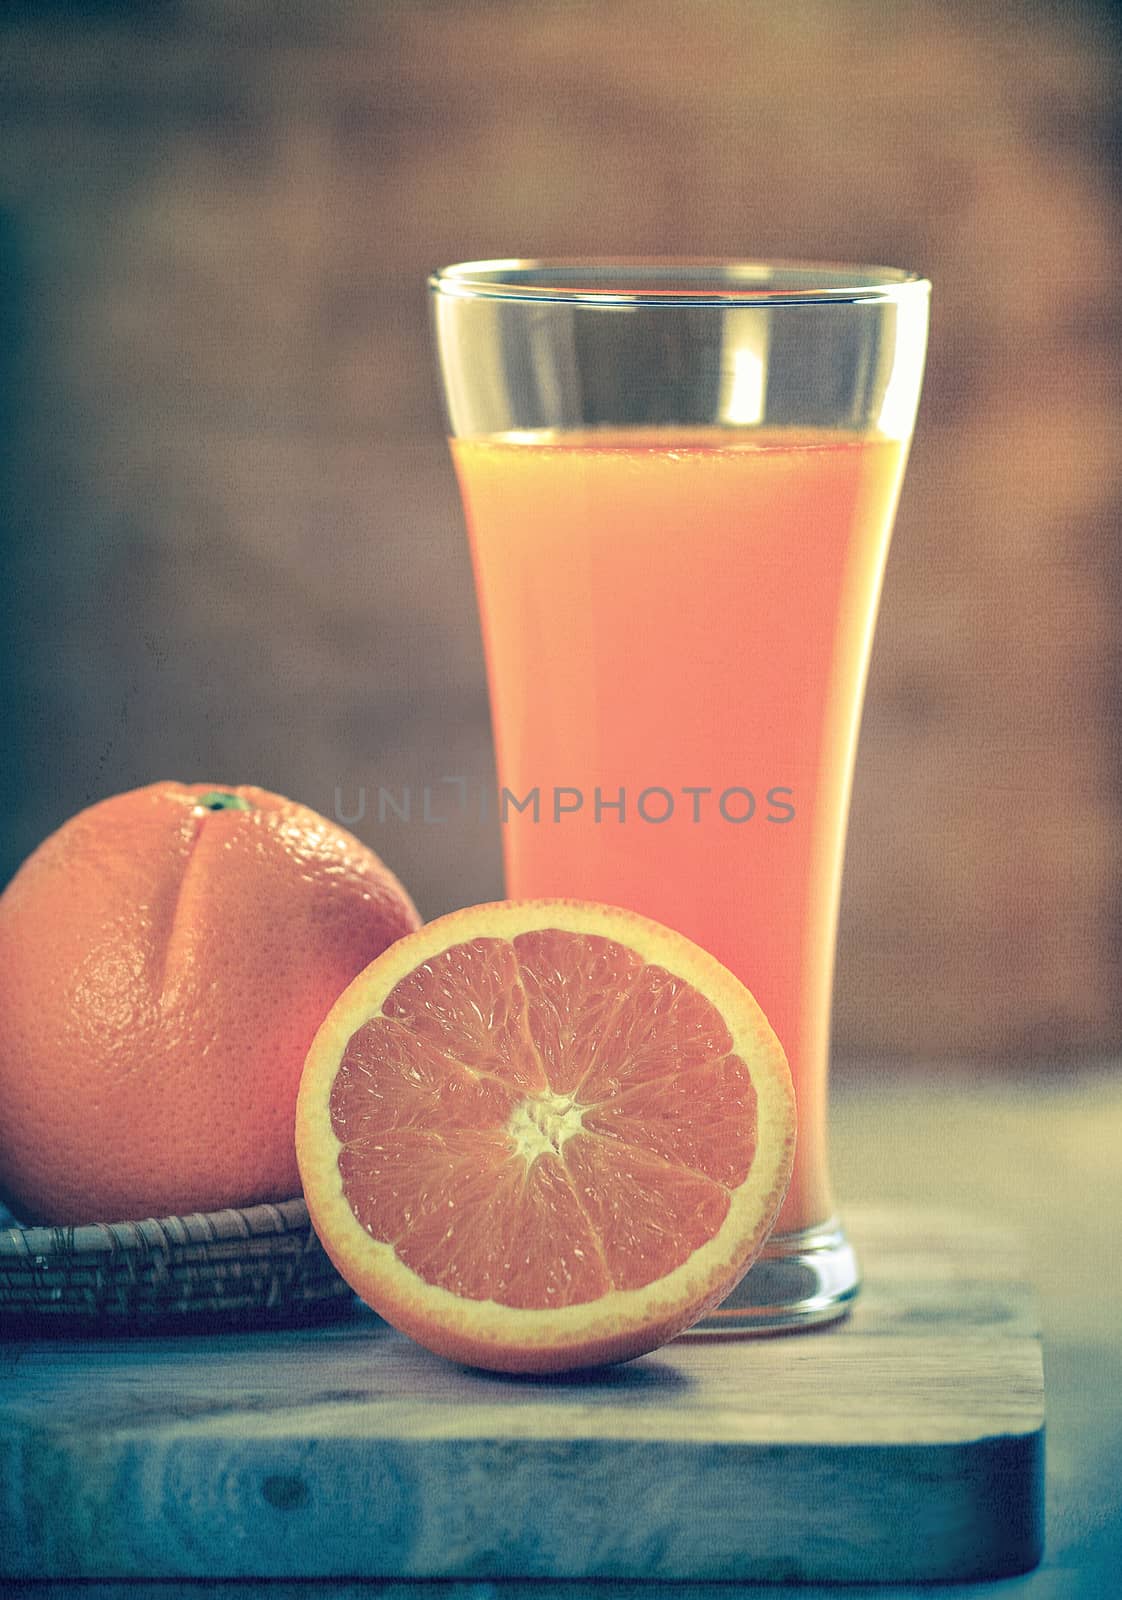 Orange juice glass and fresh oranges on wood. Photo in retro style